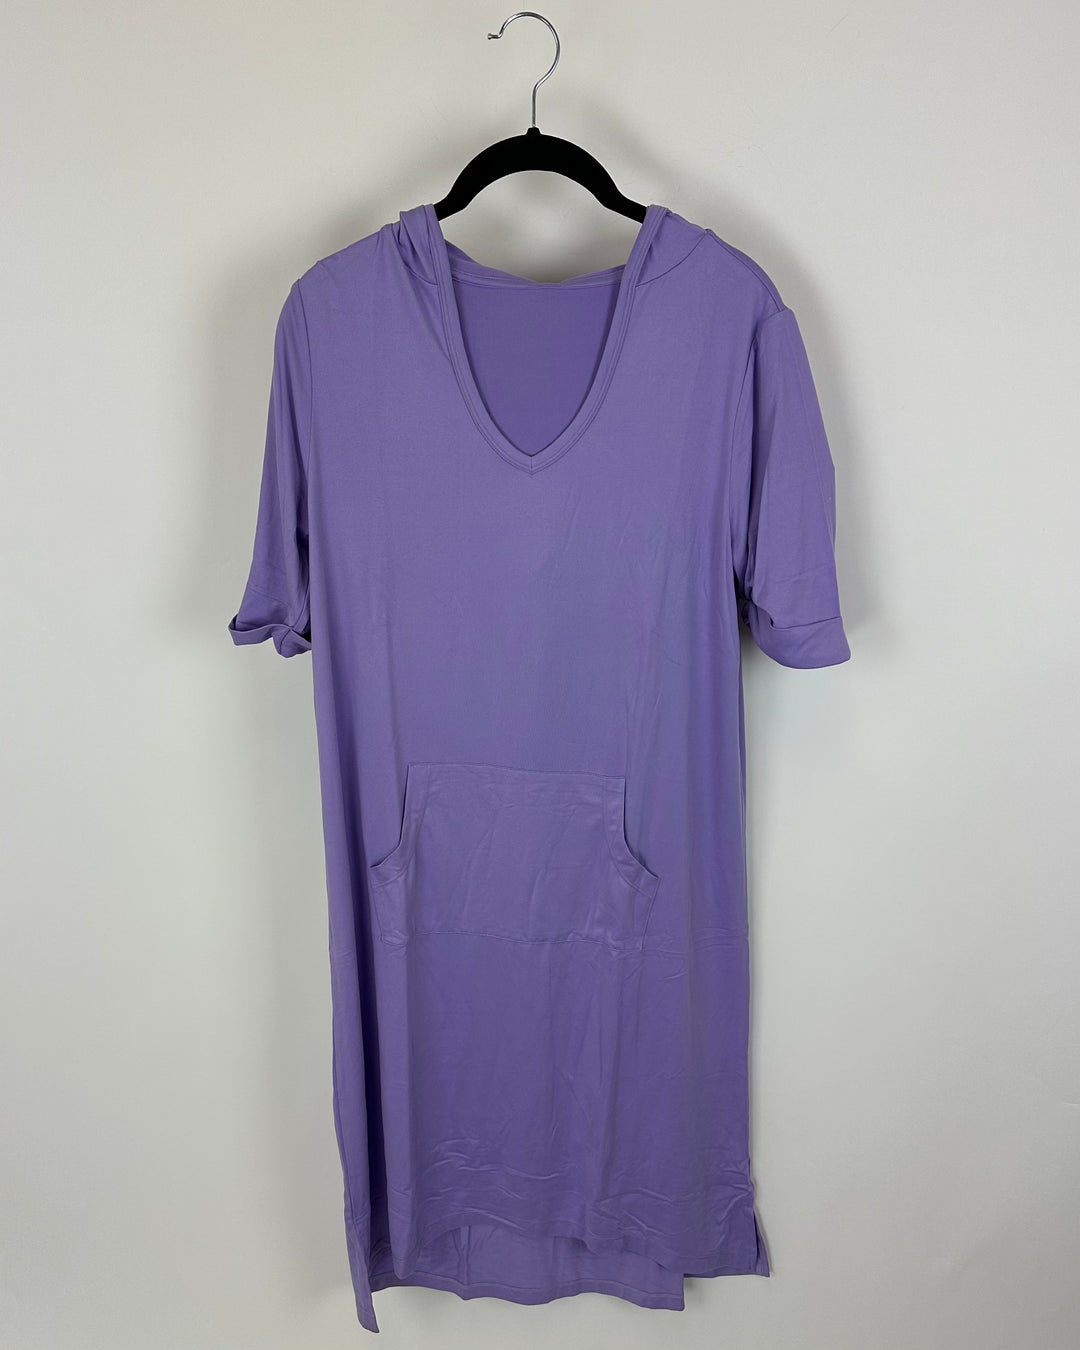 Lavender Lounge Dress - Size 4/6